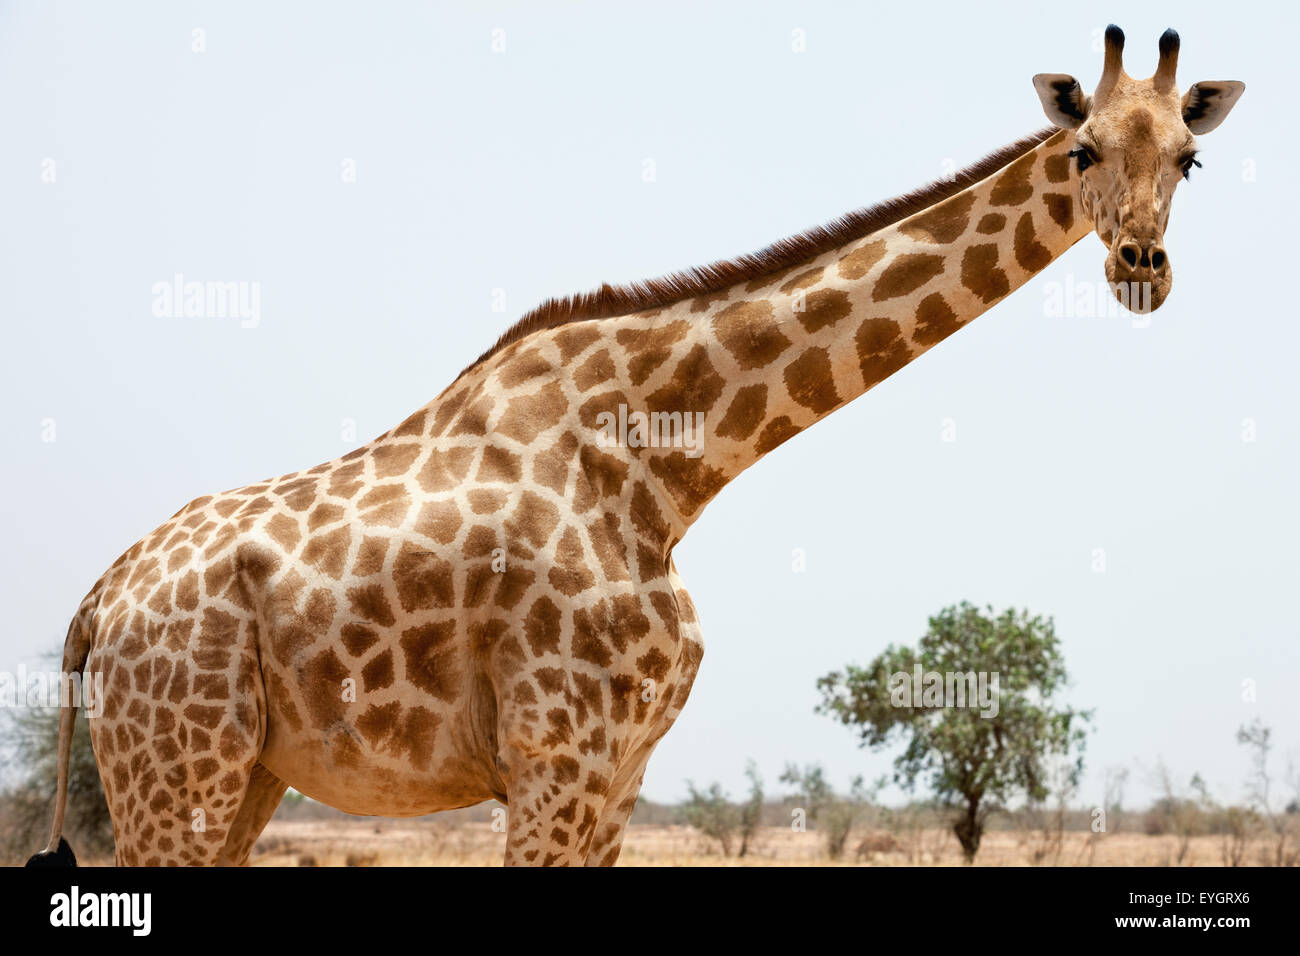 Southwest NIger,Africa,African Animal,Blue Sky Stock Photo